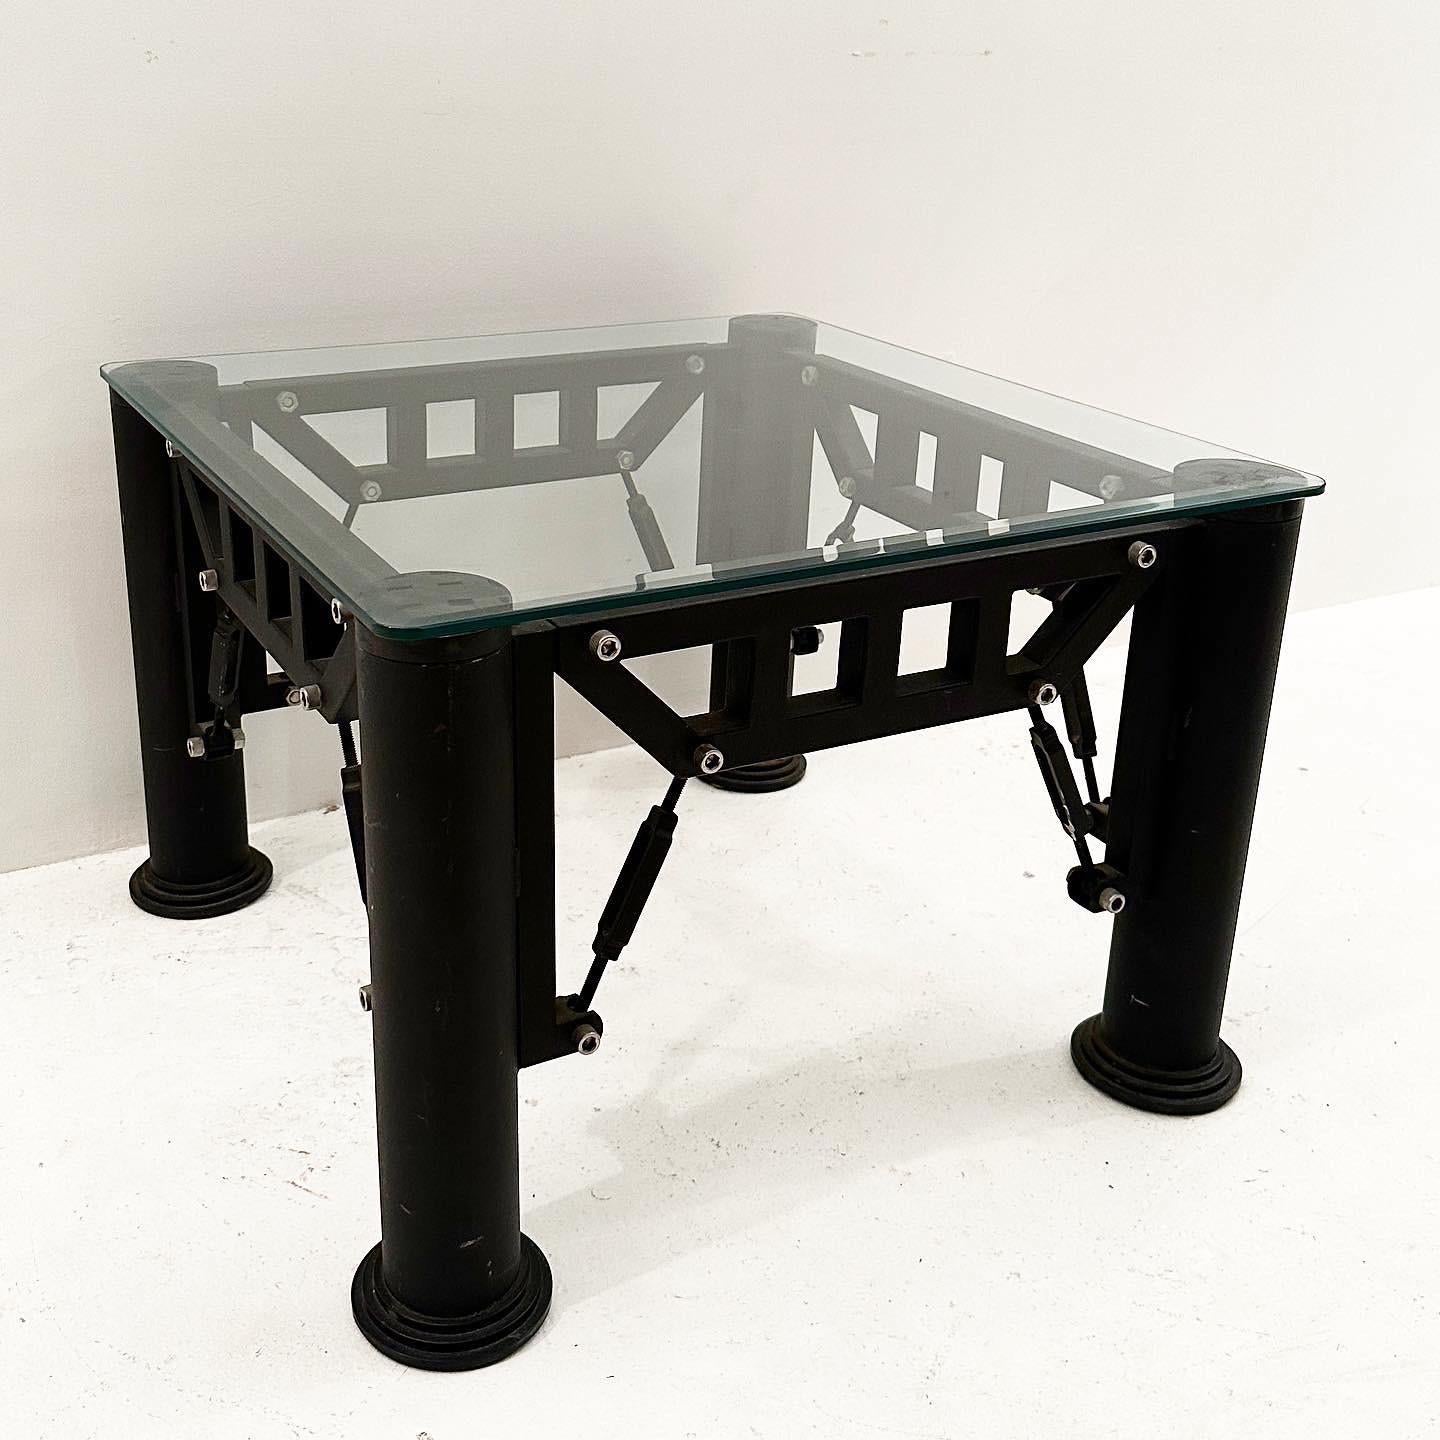 Postmodern industrial BDSM style table.